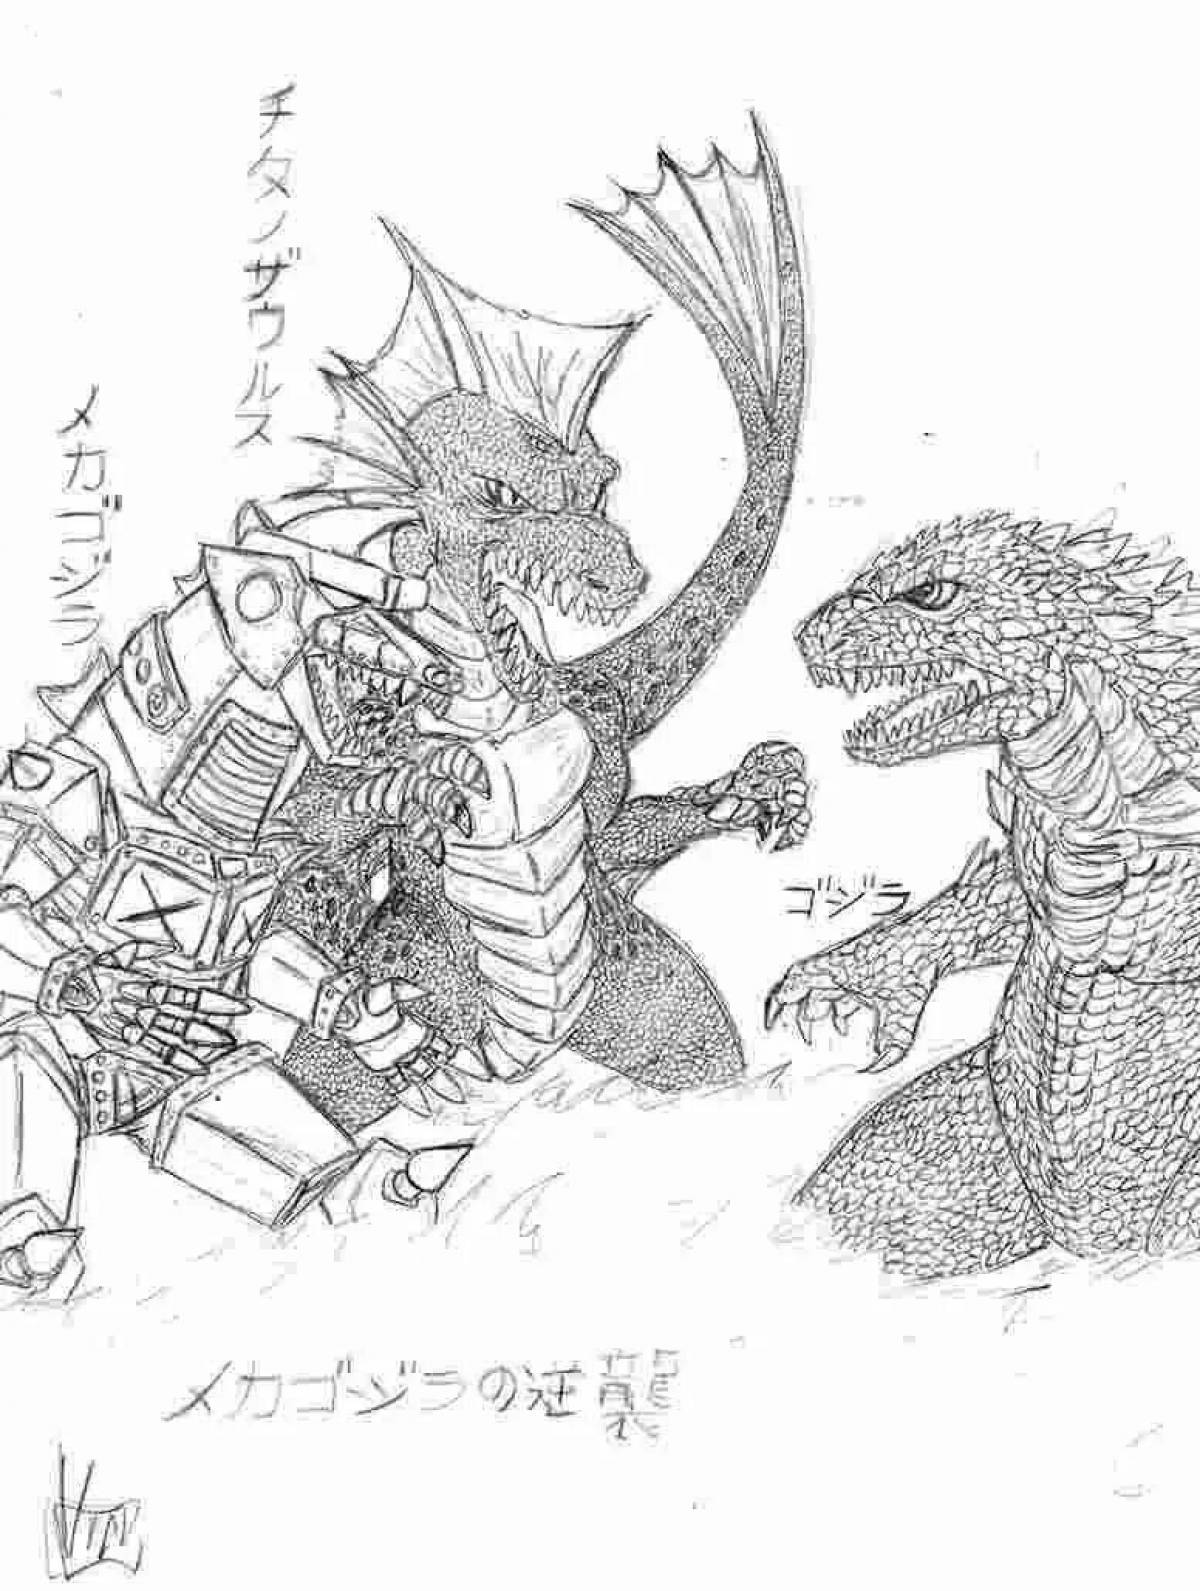 Godzilla vs MechaGodzilla #4